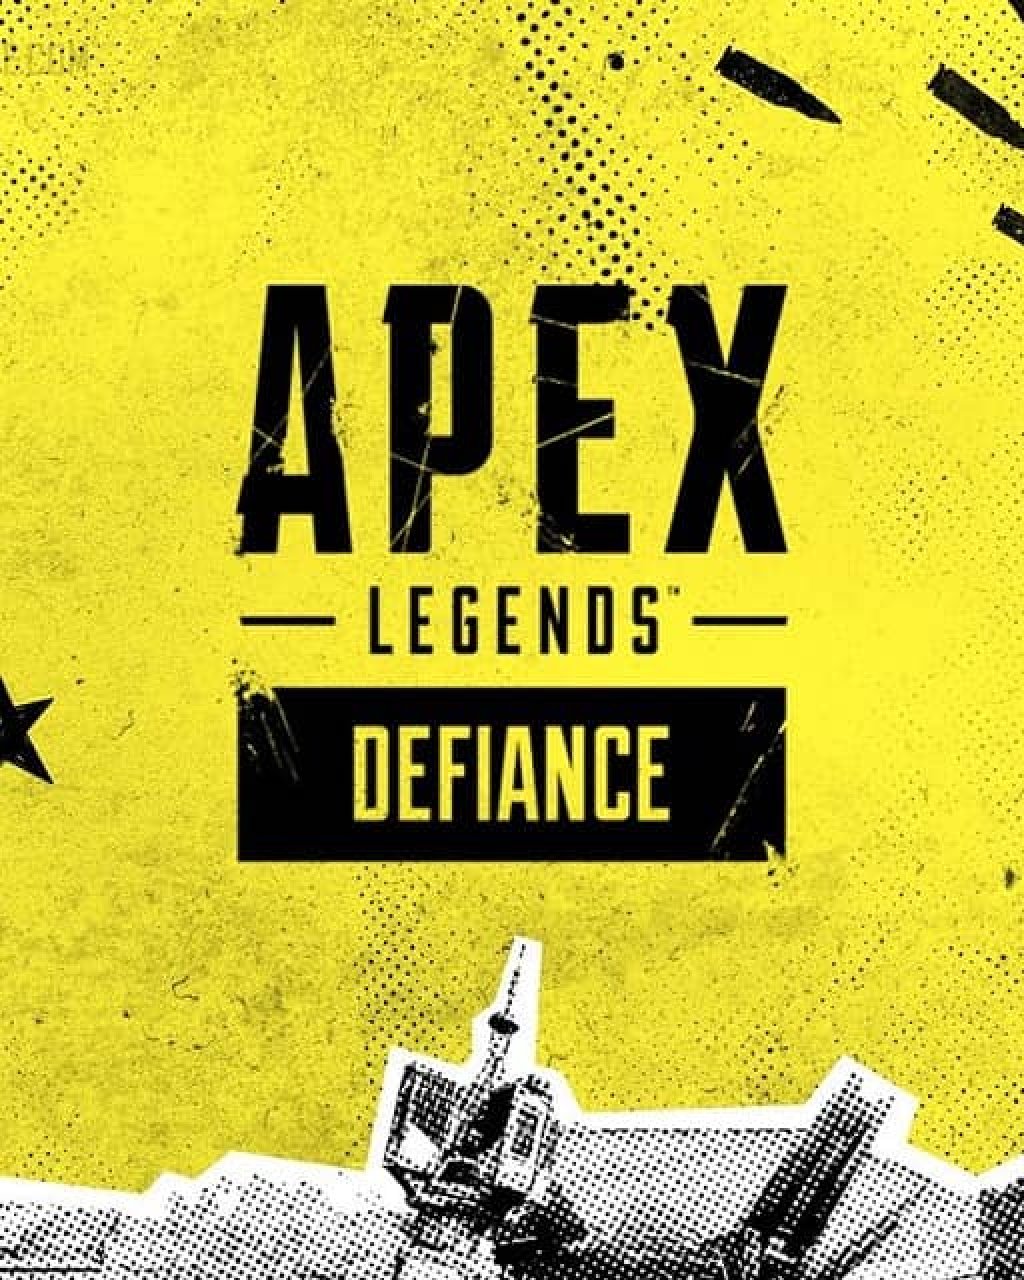 Apex Legends Defiance Pack